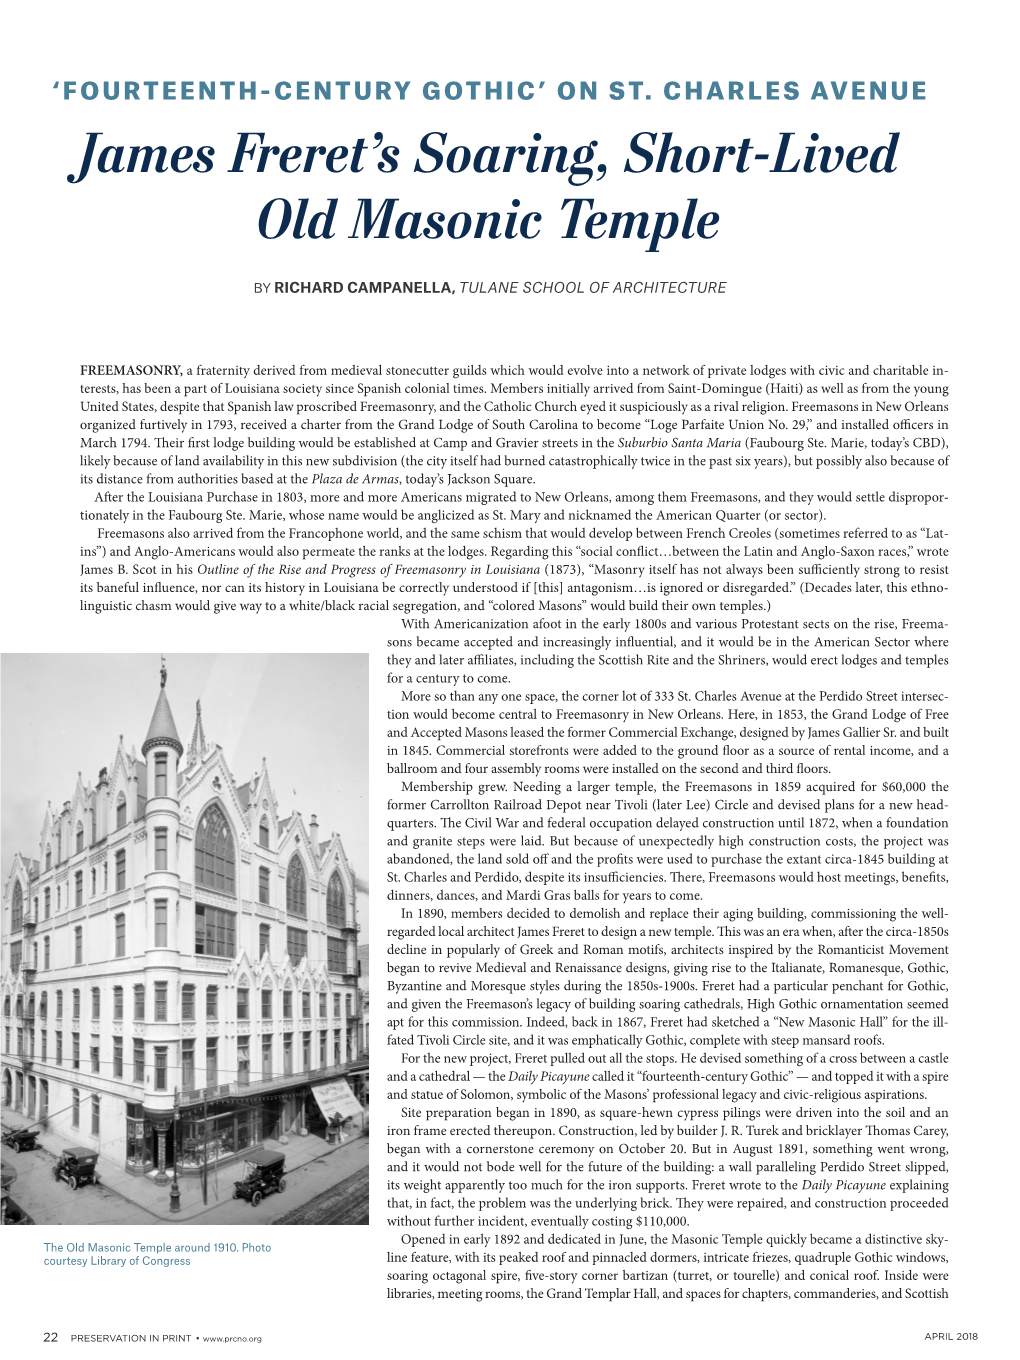 James Freret's Old Masonic Temple